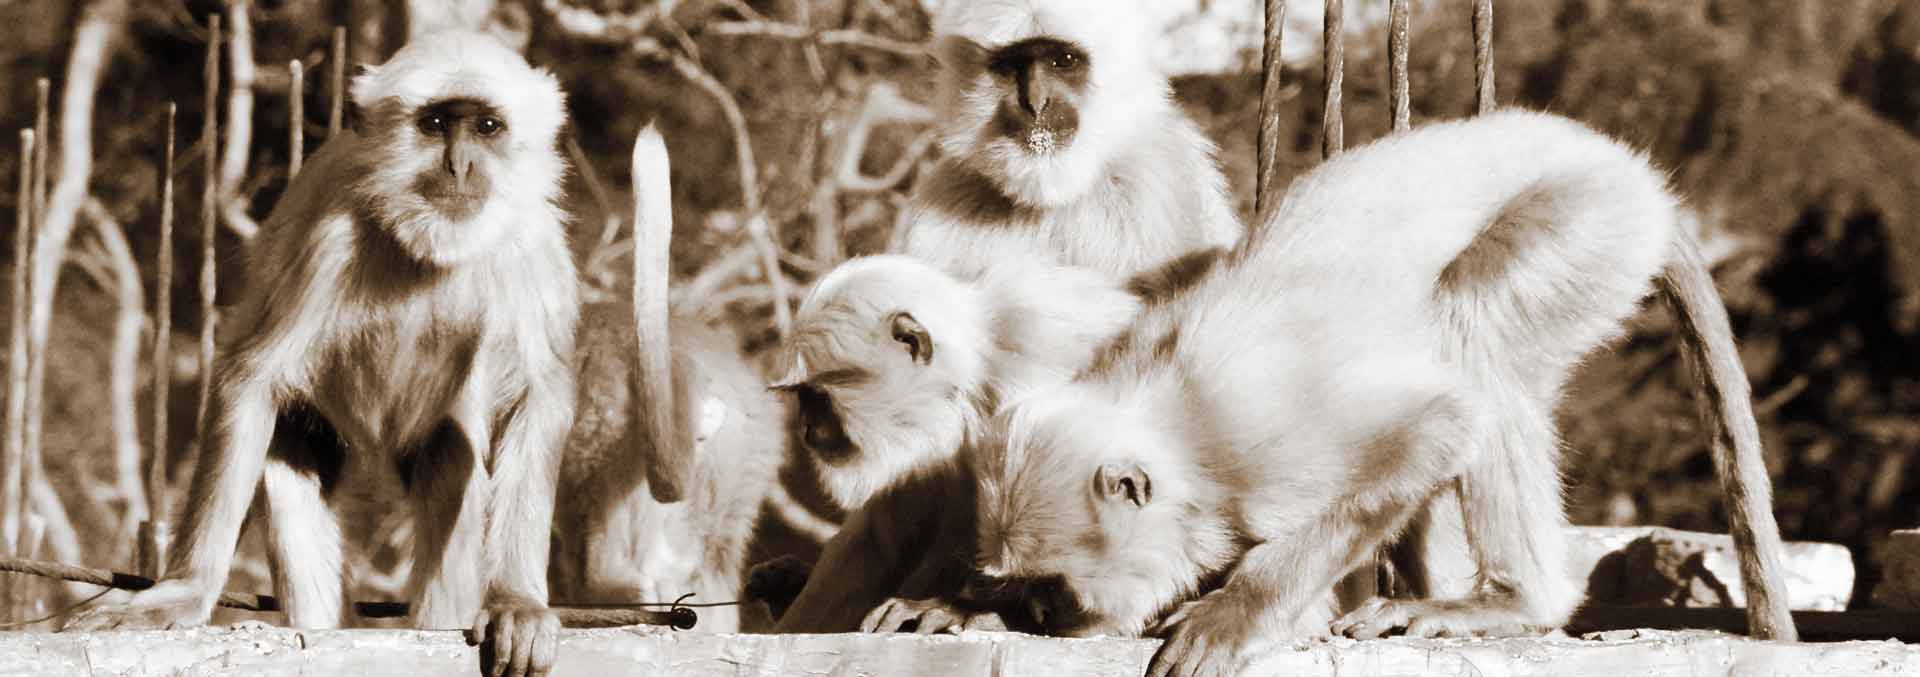 Monkeys India